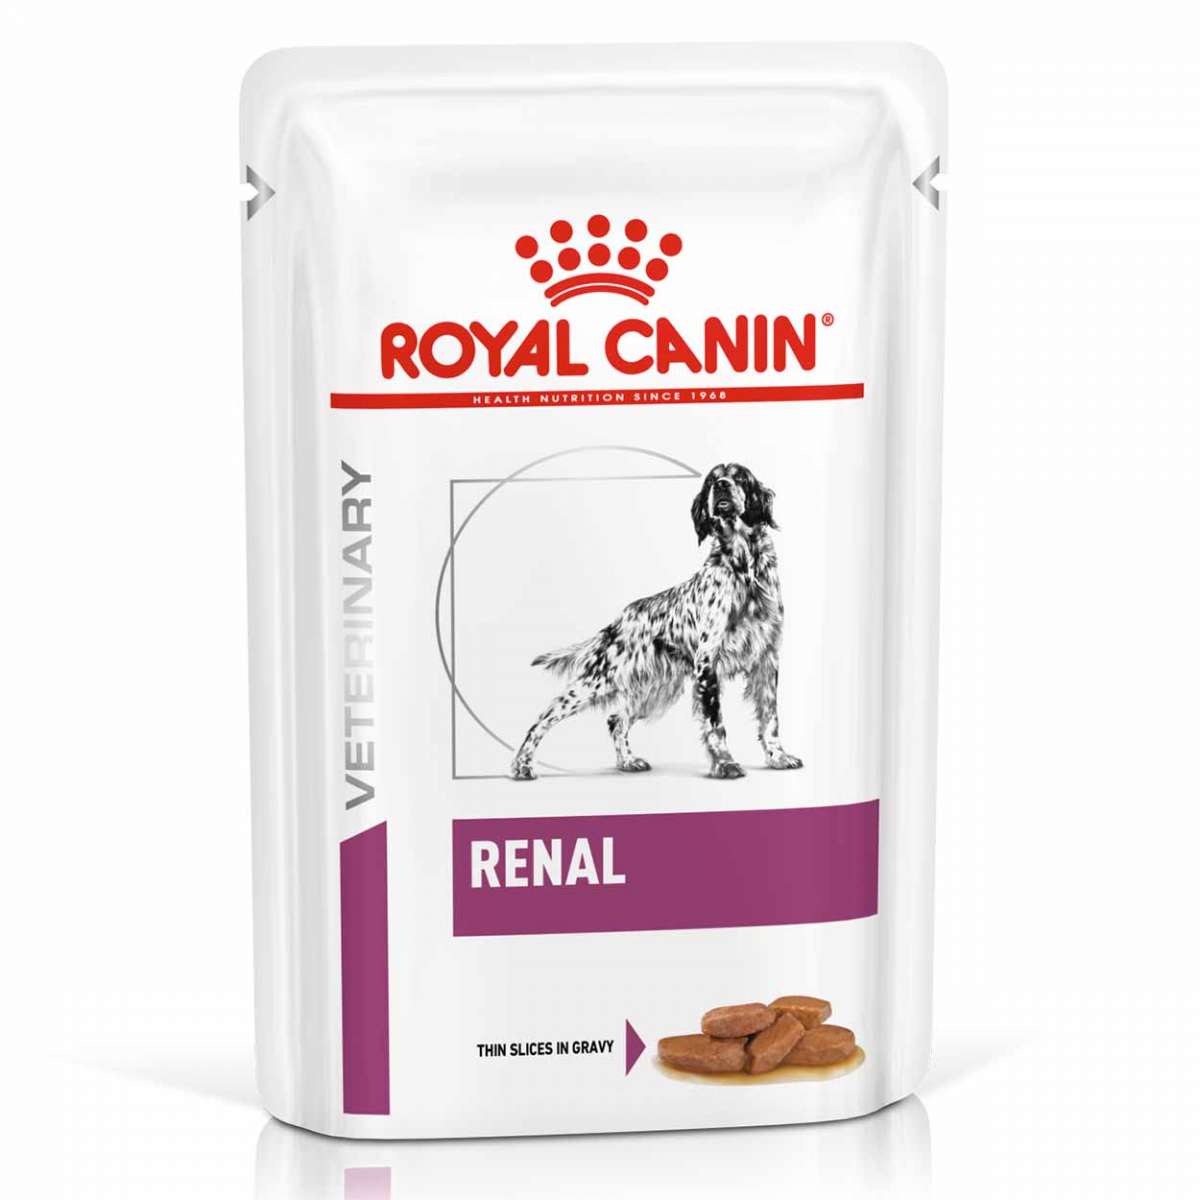 Royal Canin Hund Renal 12 x 100g preisgünstig bestellen